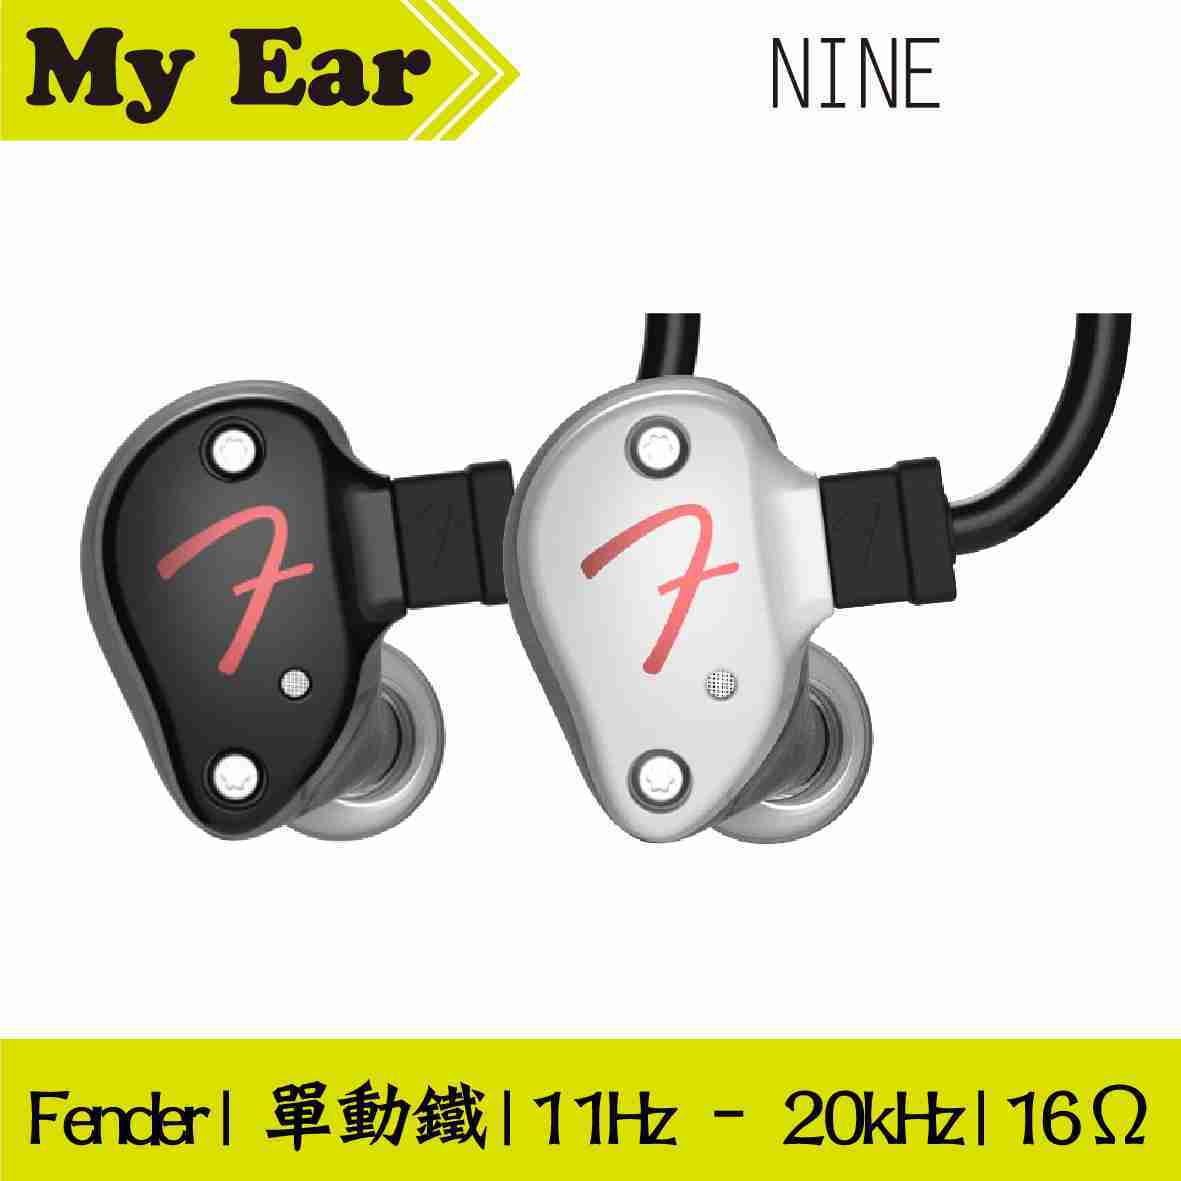 Fender NINE 兩色可選 耳道式 監聽 耳機 Pro IEM | My Ear耳機專門店